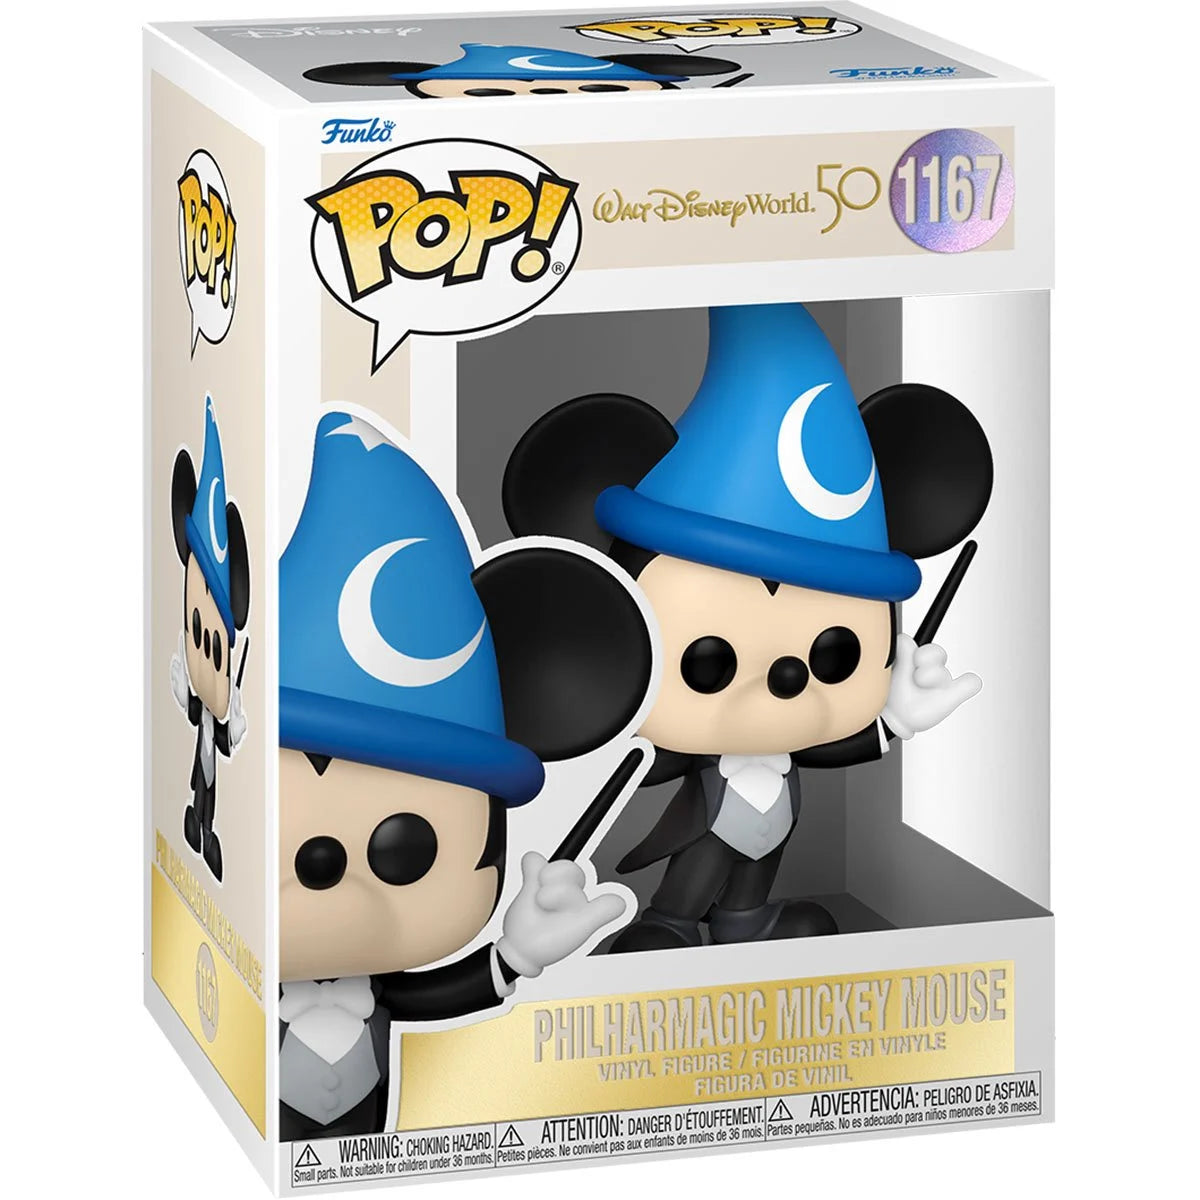 Mickey Mouse Walt Disney World 50th Anniversary PhilharMagic  Pop! Vinyl Figure